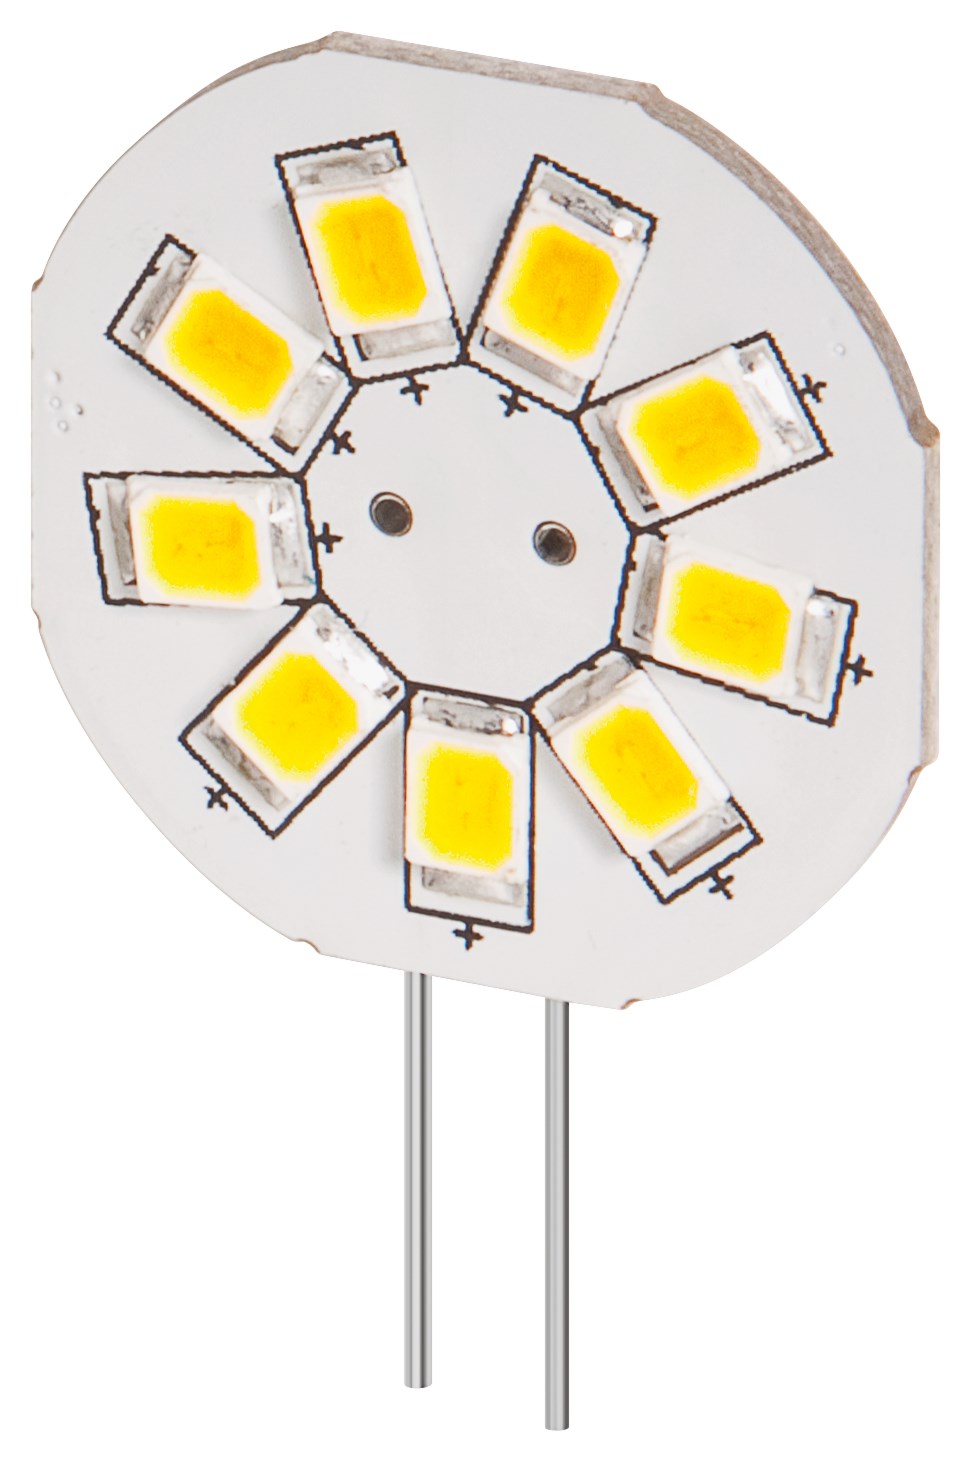 LED lamp 1.5W warm white G4 @ electrokit